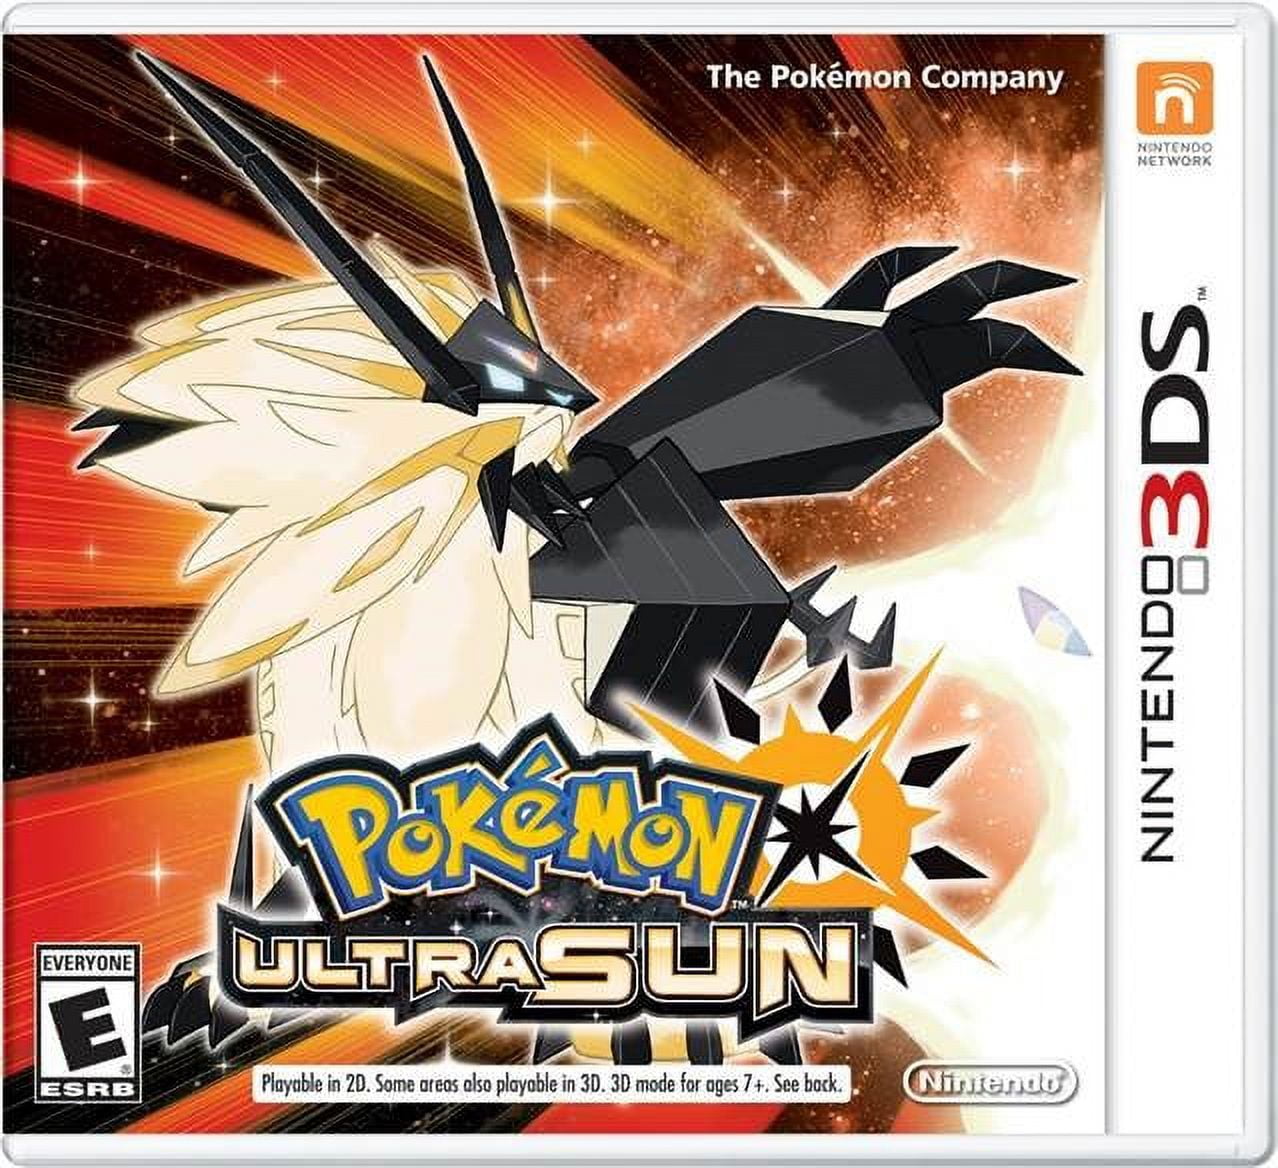 Pokemon Diamond Sun and Moon ROM - Nintendo DS Game